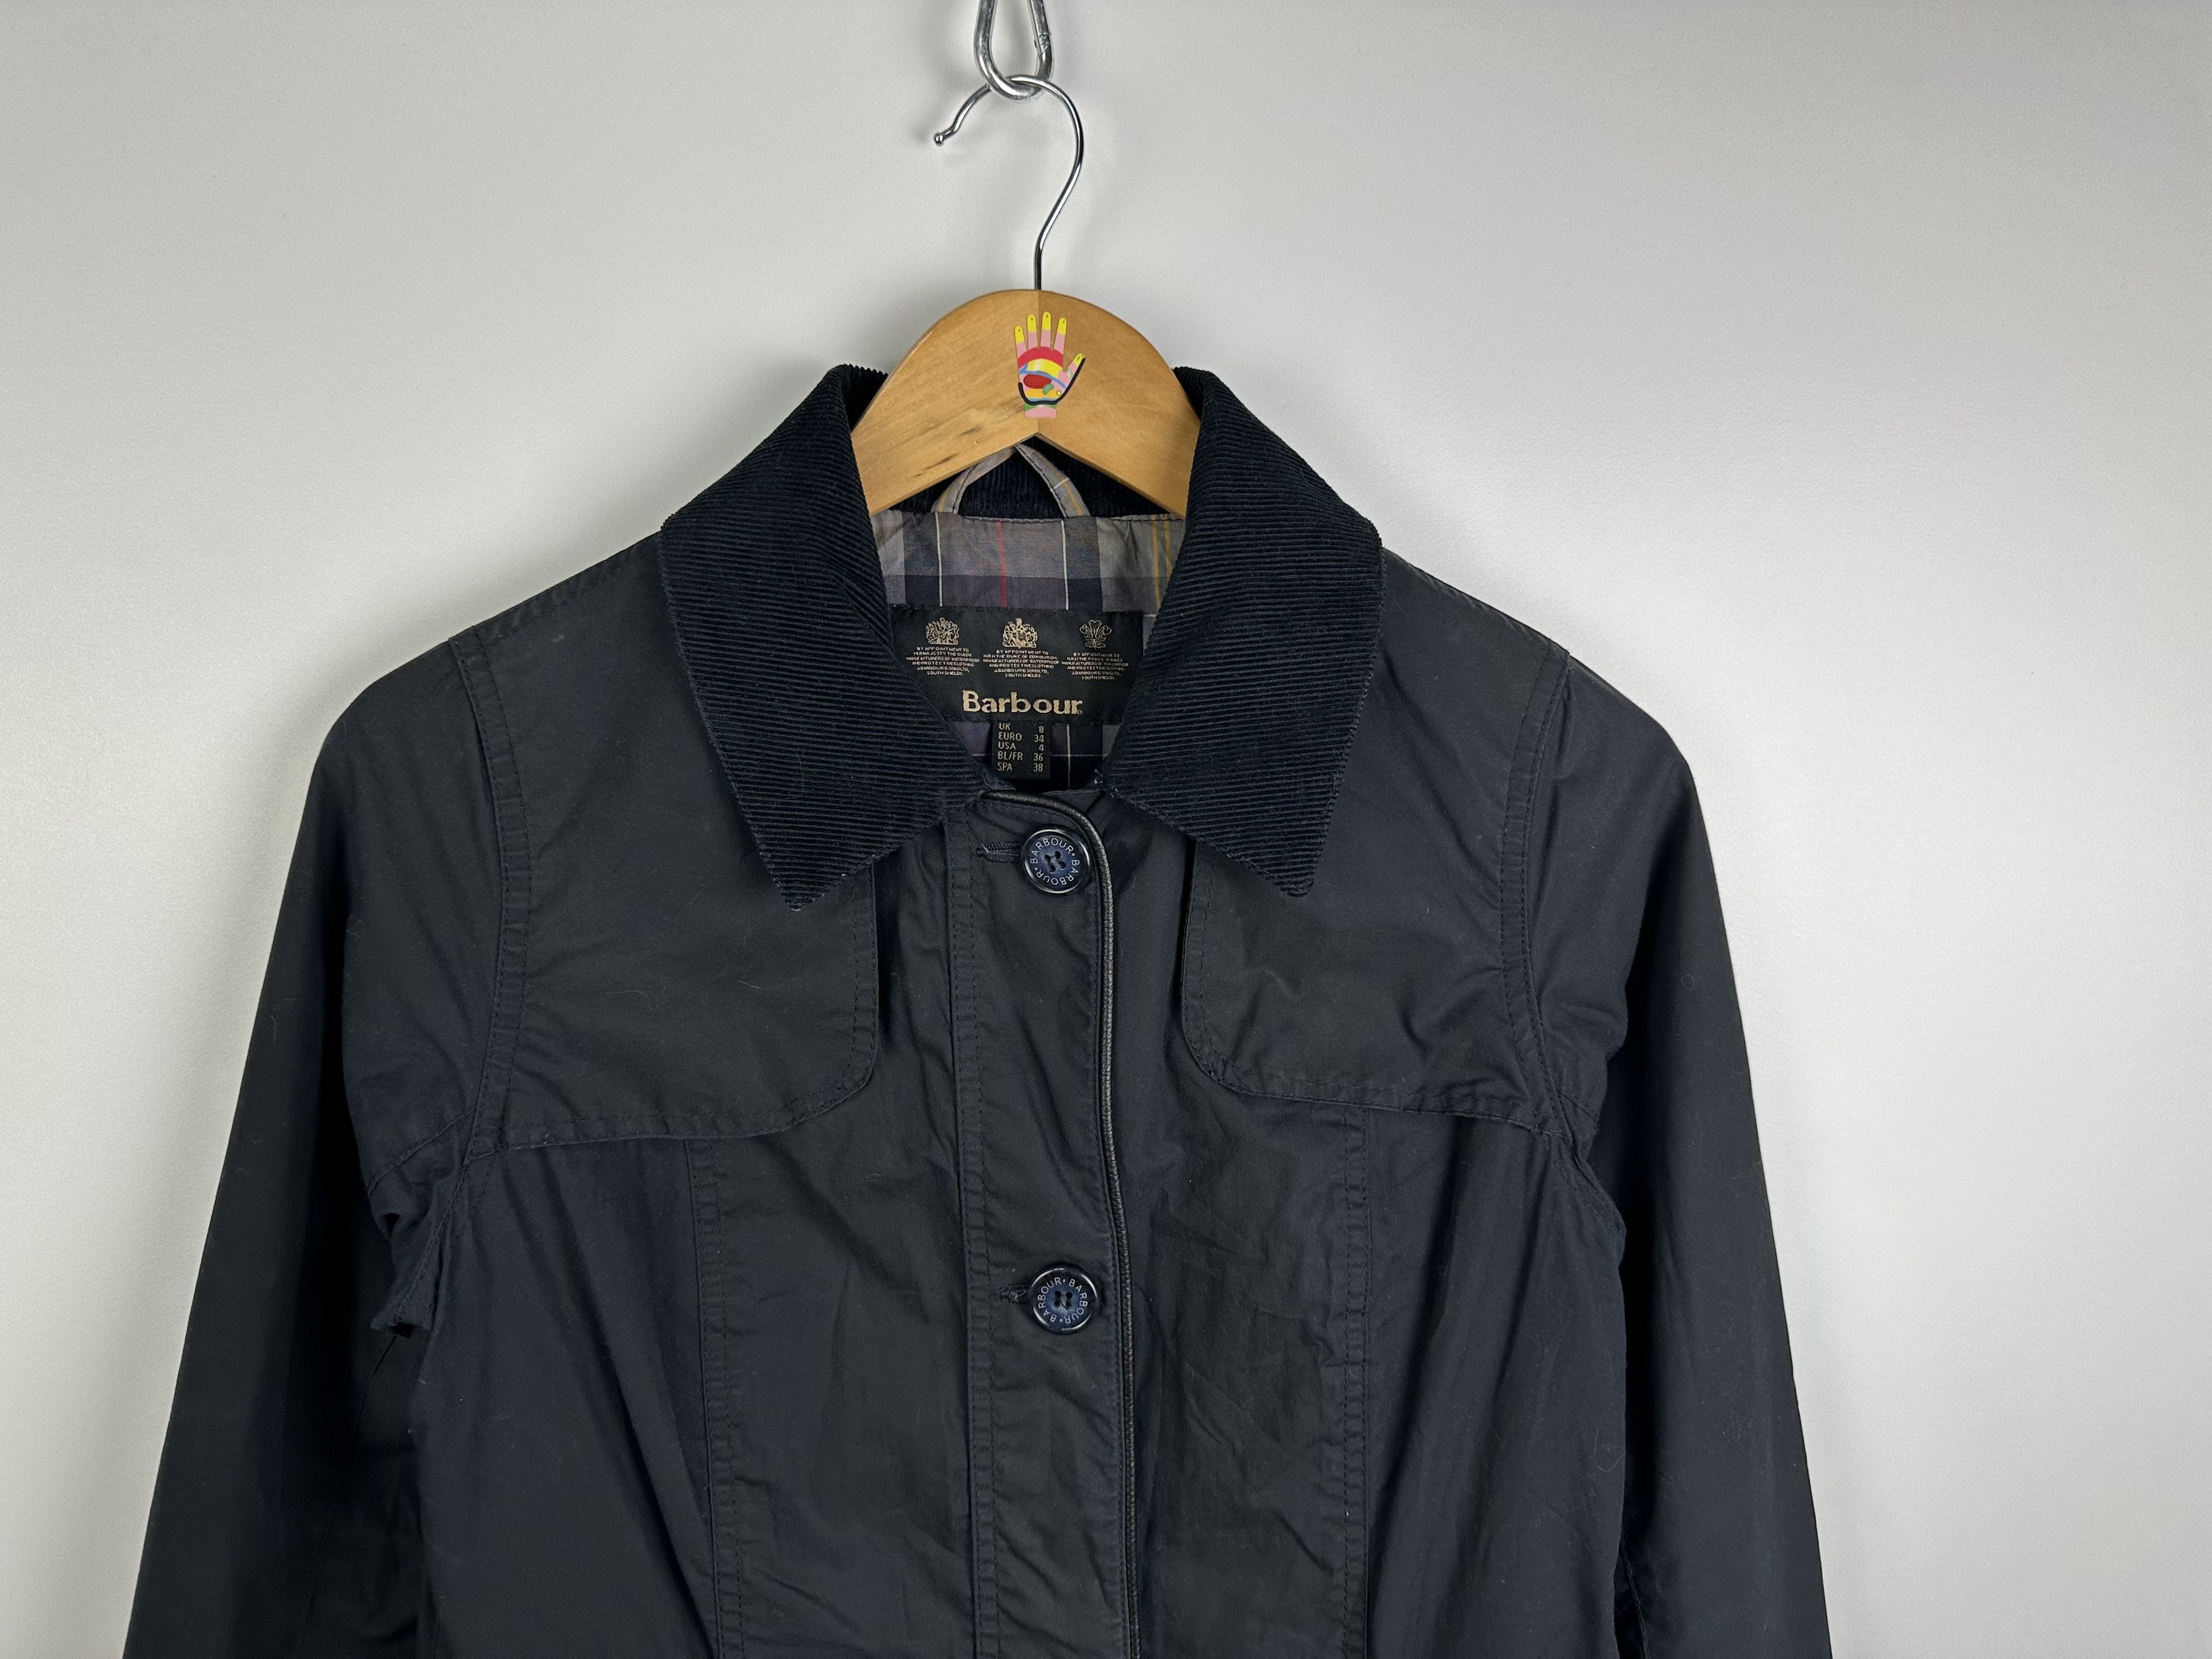 Barbour Women’s Barbour Grasmoor Waxed Jacket Coat Black Size US4 Size S / US 4 / IT 40 - 2 Preview